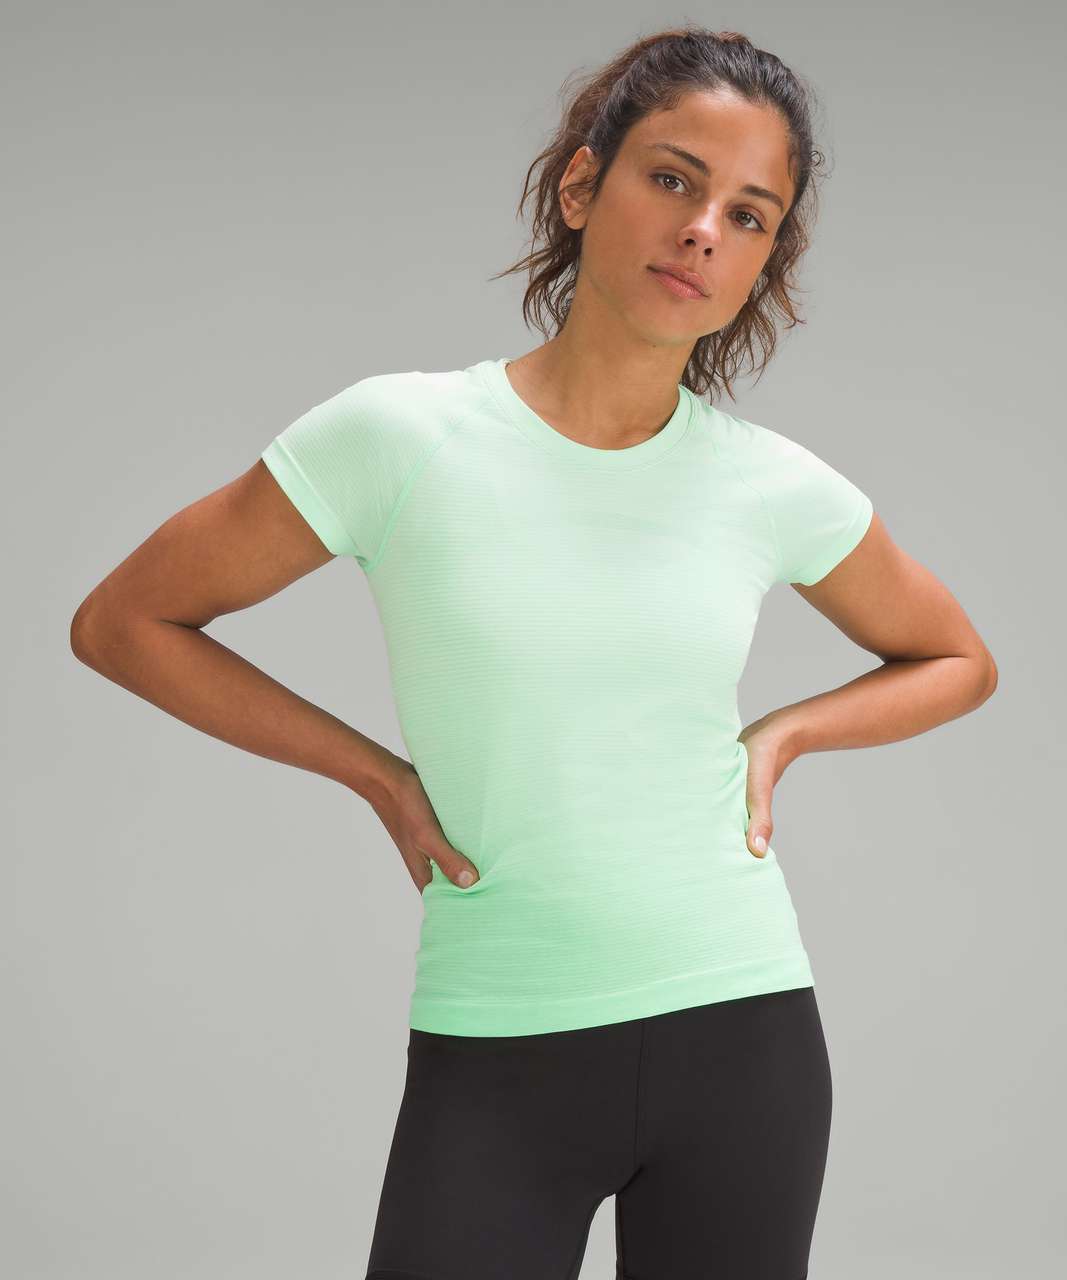 Lululemon Swiftly Tech Short-Sleeve Shirt 2.0 Race Length *Plant-Based Nylon - Earth Day Fade Lime Shock / White